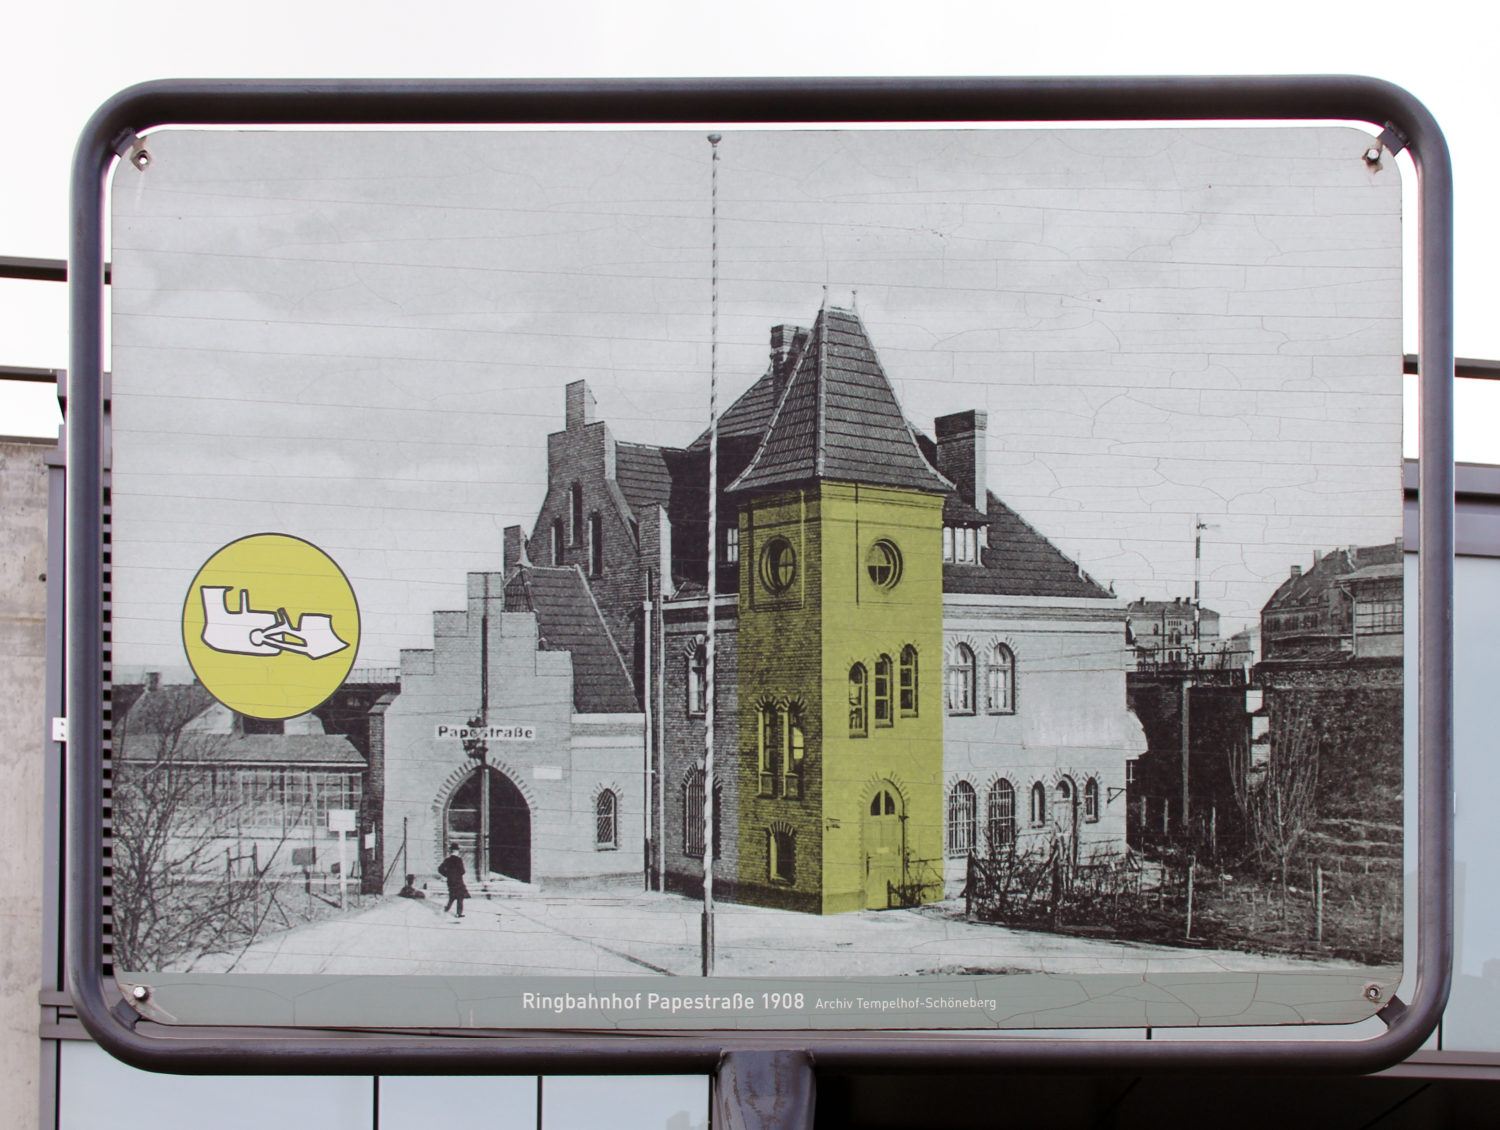 Am Bahnhof Südkreuz erinnern Tafeln an den früheren Bahnhof Papestraße. Gelb hervorgehoben ist der Uhrturm der Ringbahnstation. Foto: Wikimedia/OTFW, Berlin/CC BY-SA 3.0